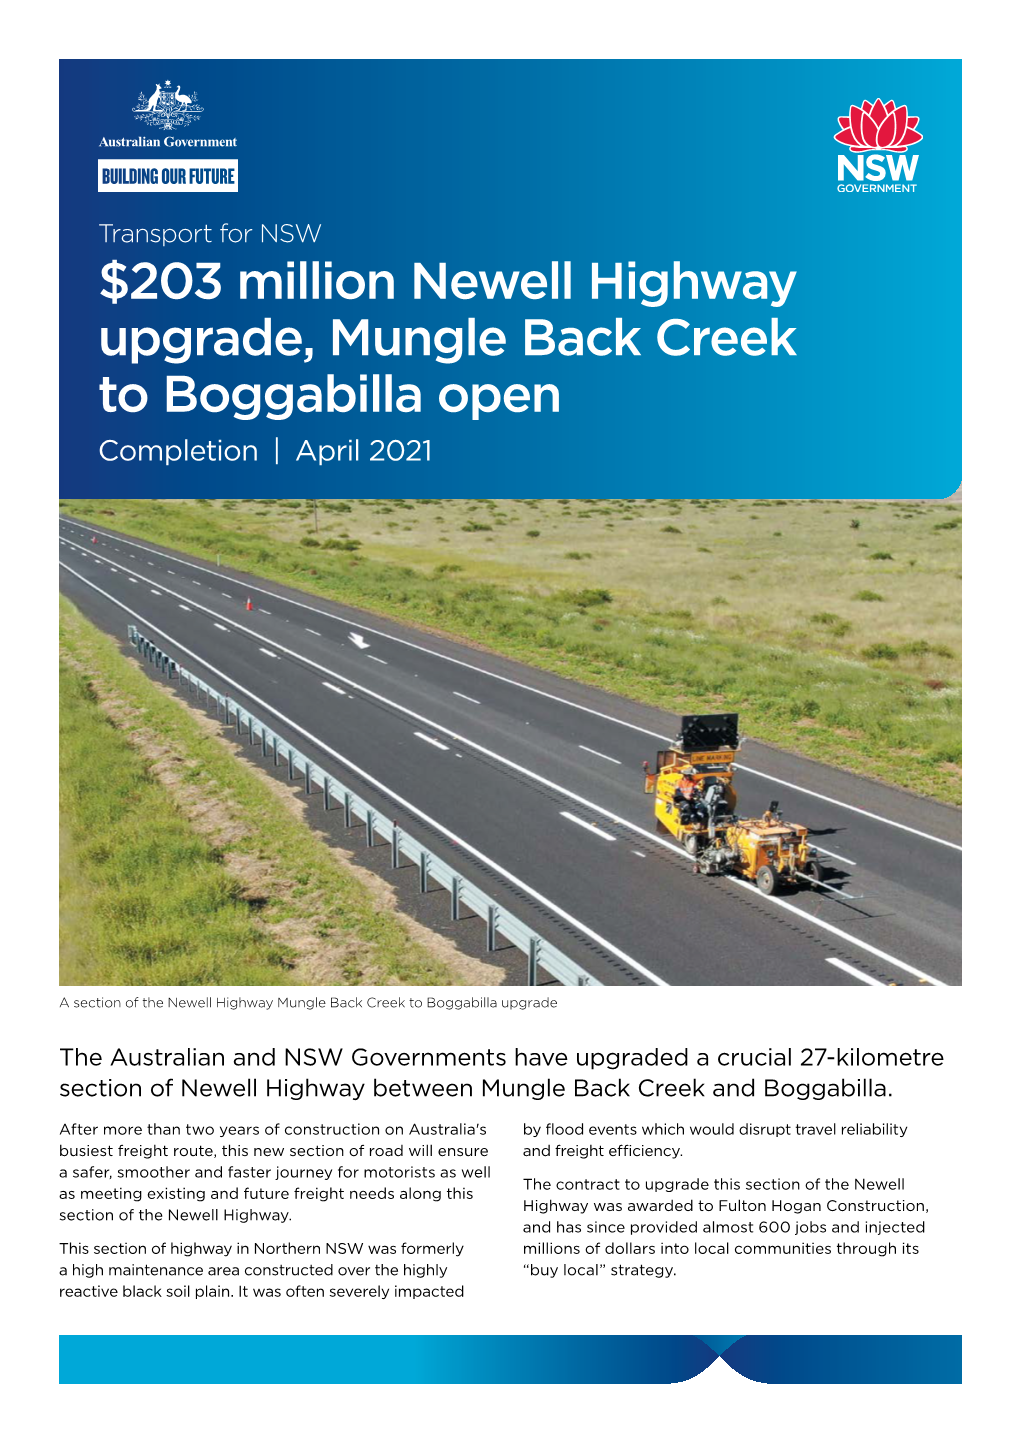 $203 Million Newell Highway Upgrade, Mungle Back Creek to Boggabilla Open Completion | April 2021